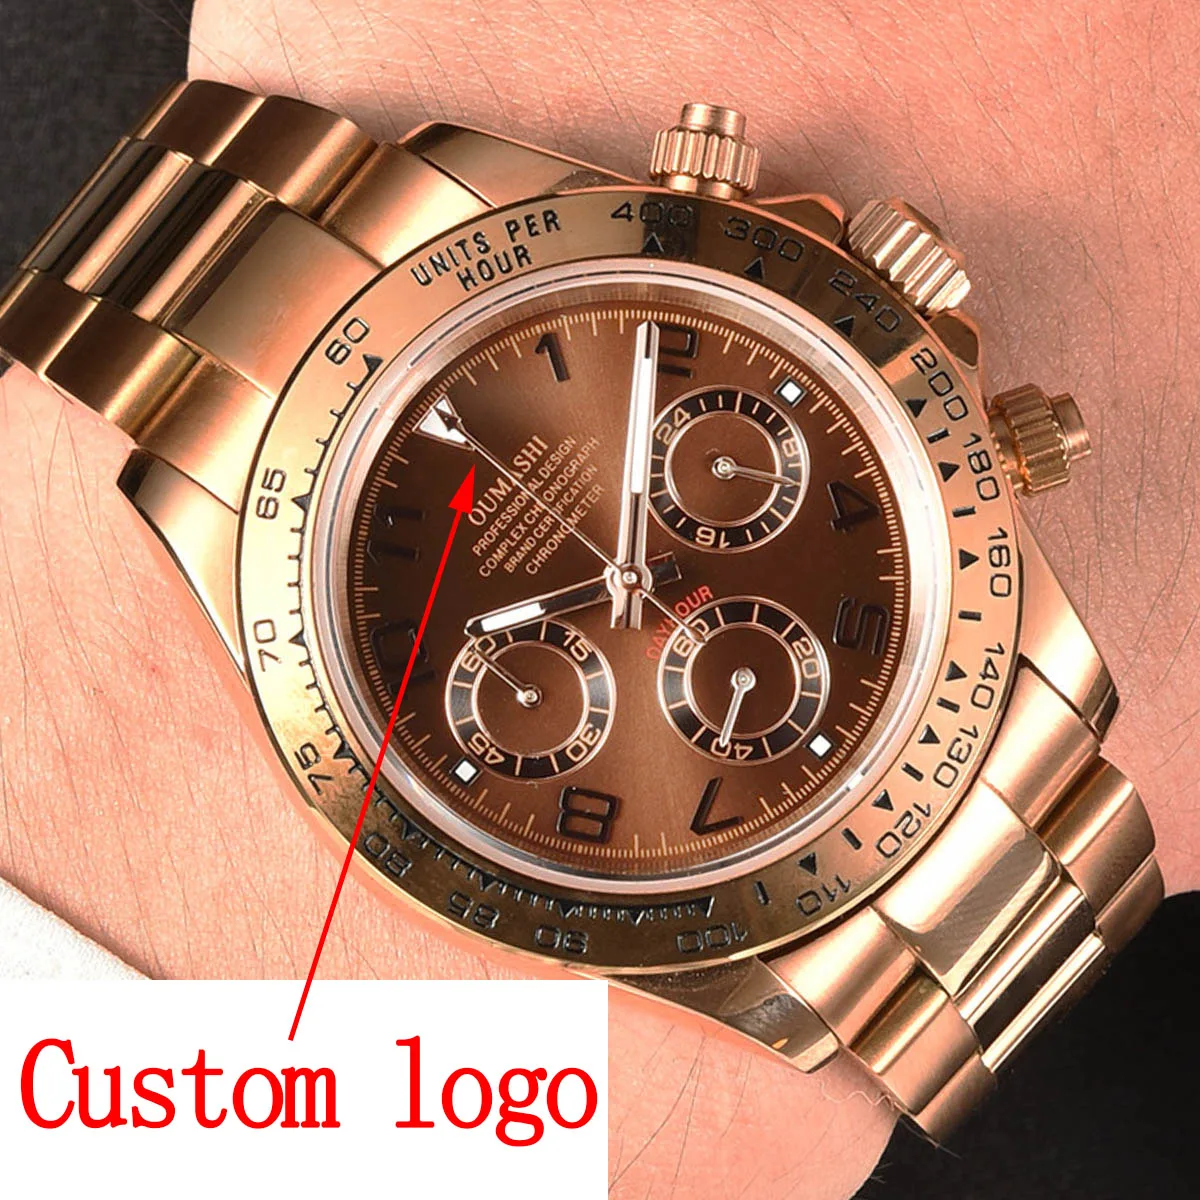 

40mm New Quartz Men's Watches Sapphire glass custom logo dial vk63 watch chronograph watch luxury watch men Stainless Waterproof